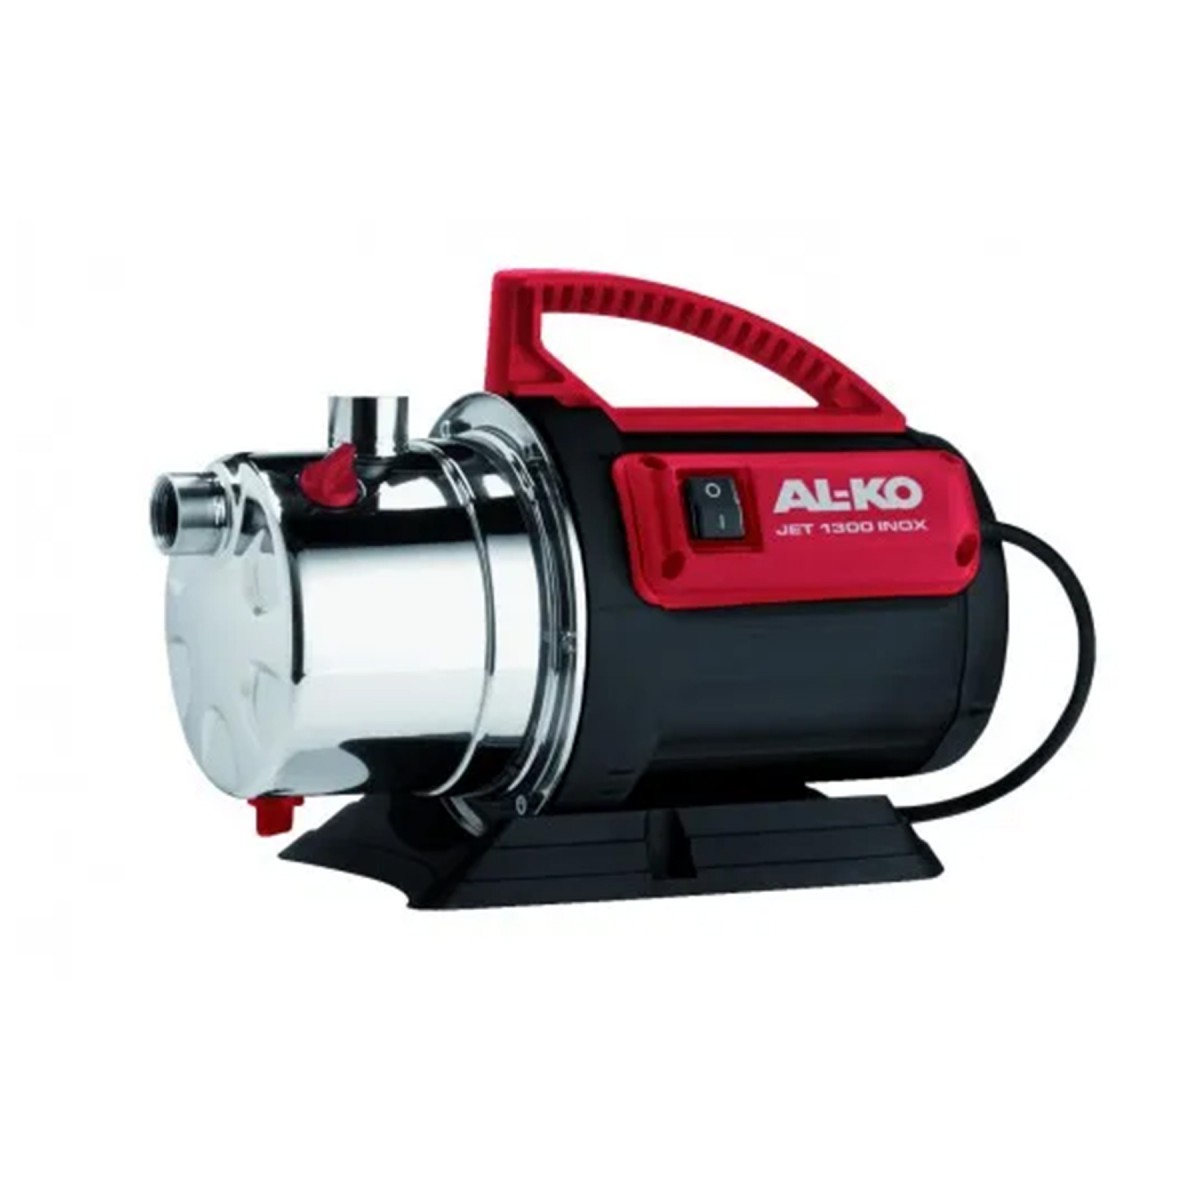 AL-KO Jet 1300 Easy Inox surface pump